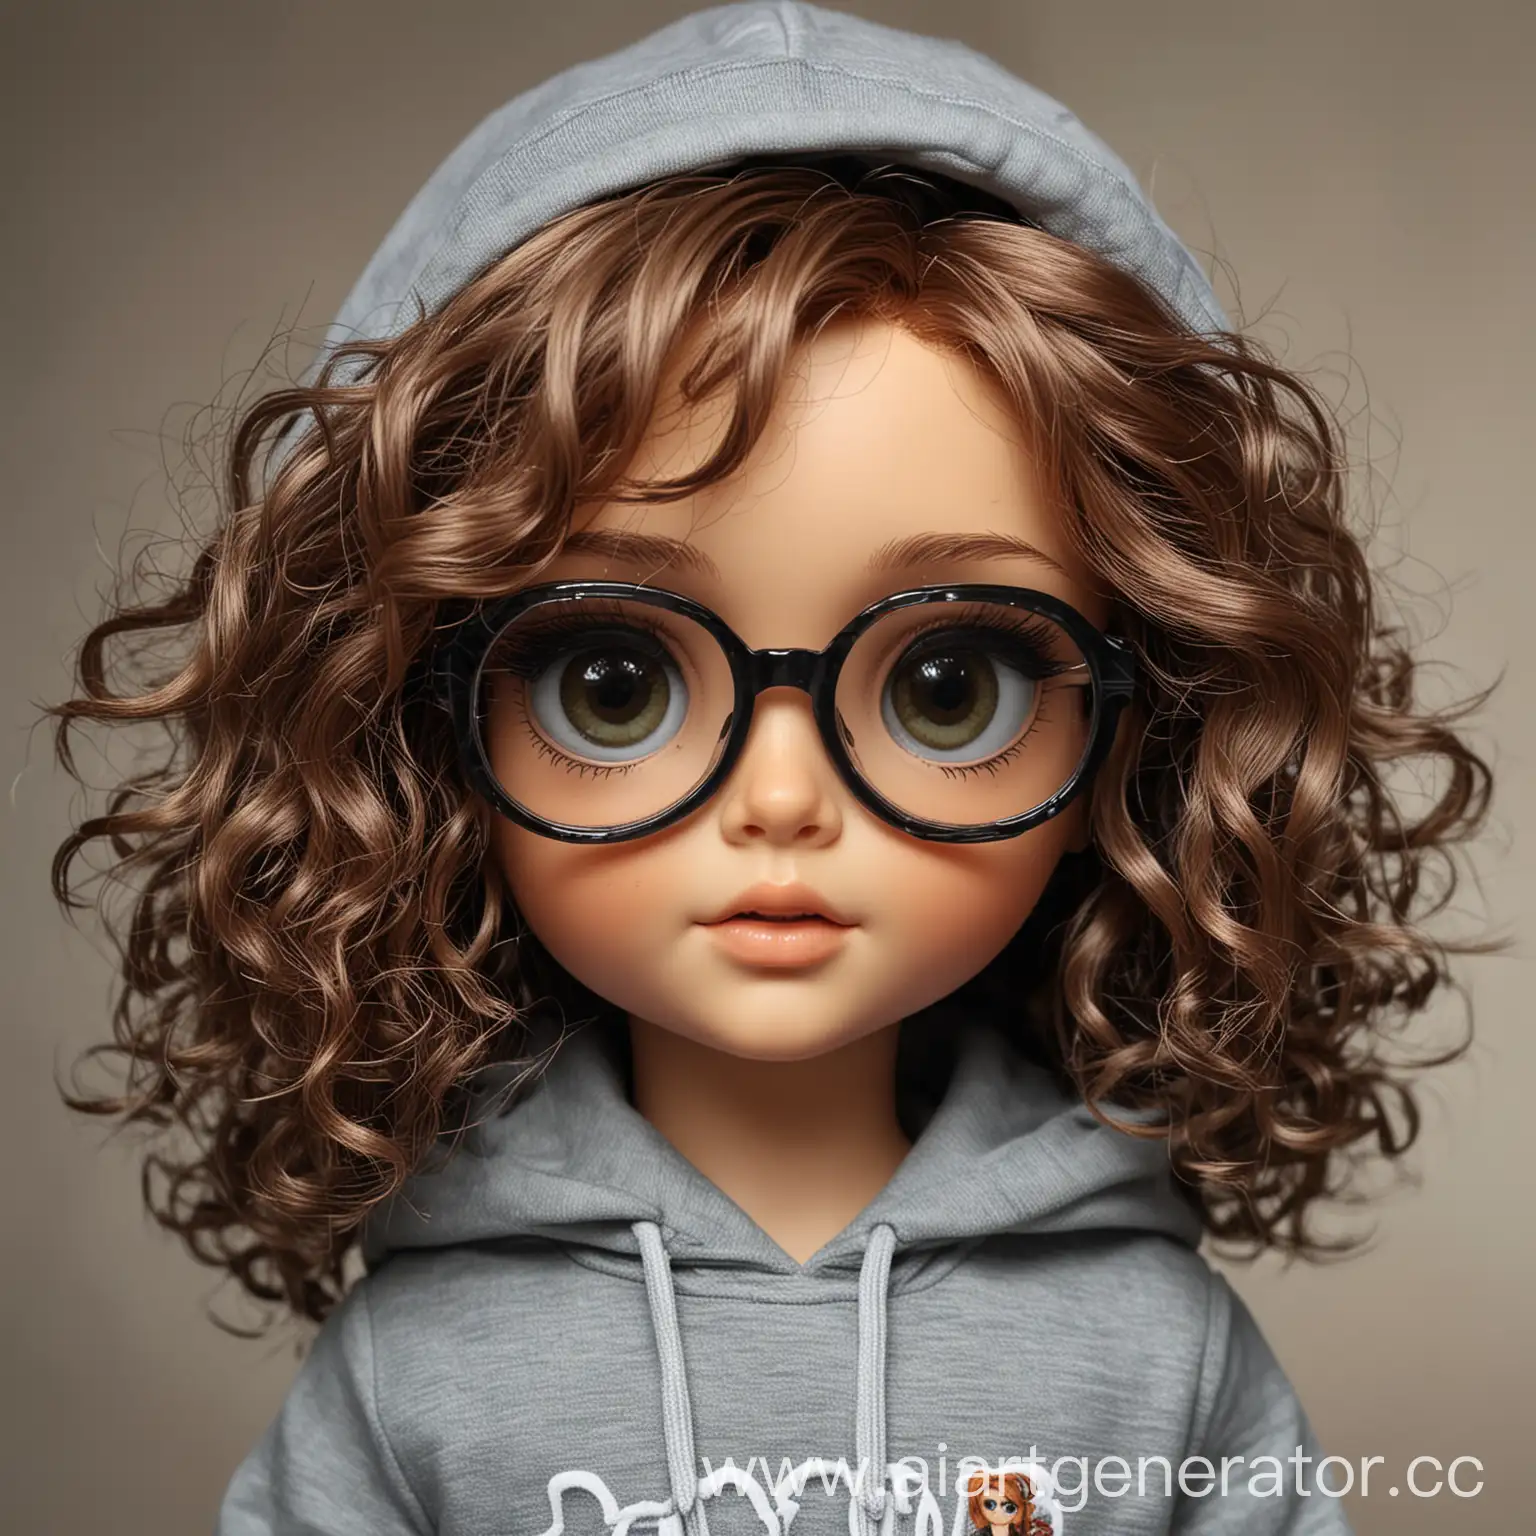 Doll-with-CurlyWavy-Brown-Hair-Large-GreenGrey-Eyes-and-Glasses-in-Gray-Hoodie